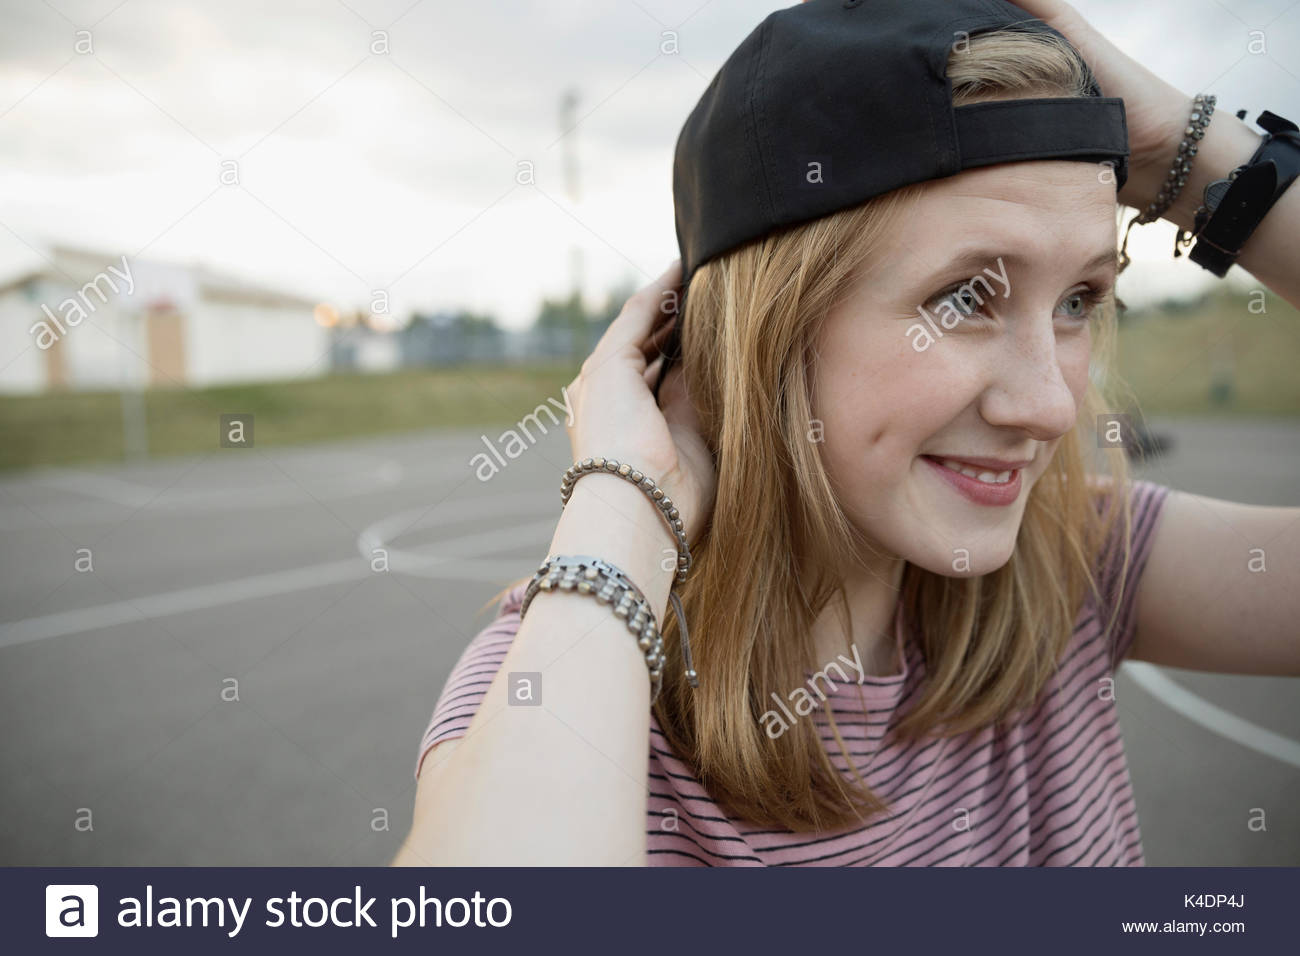 Smiling teenage girl wearing backward baseball cap on outdoor basketball court Stock Photo